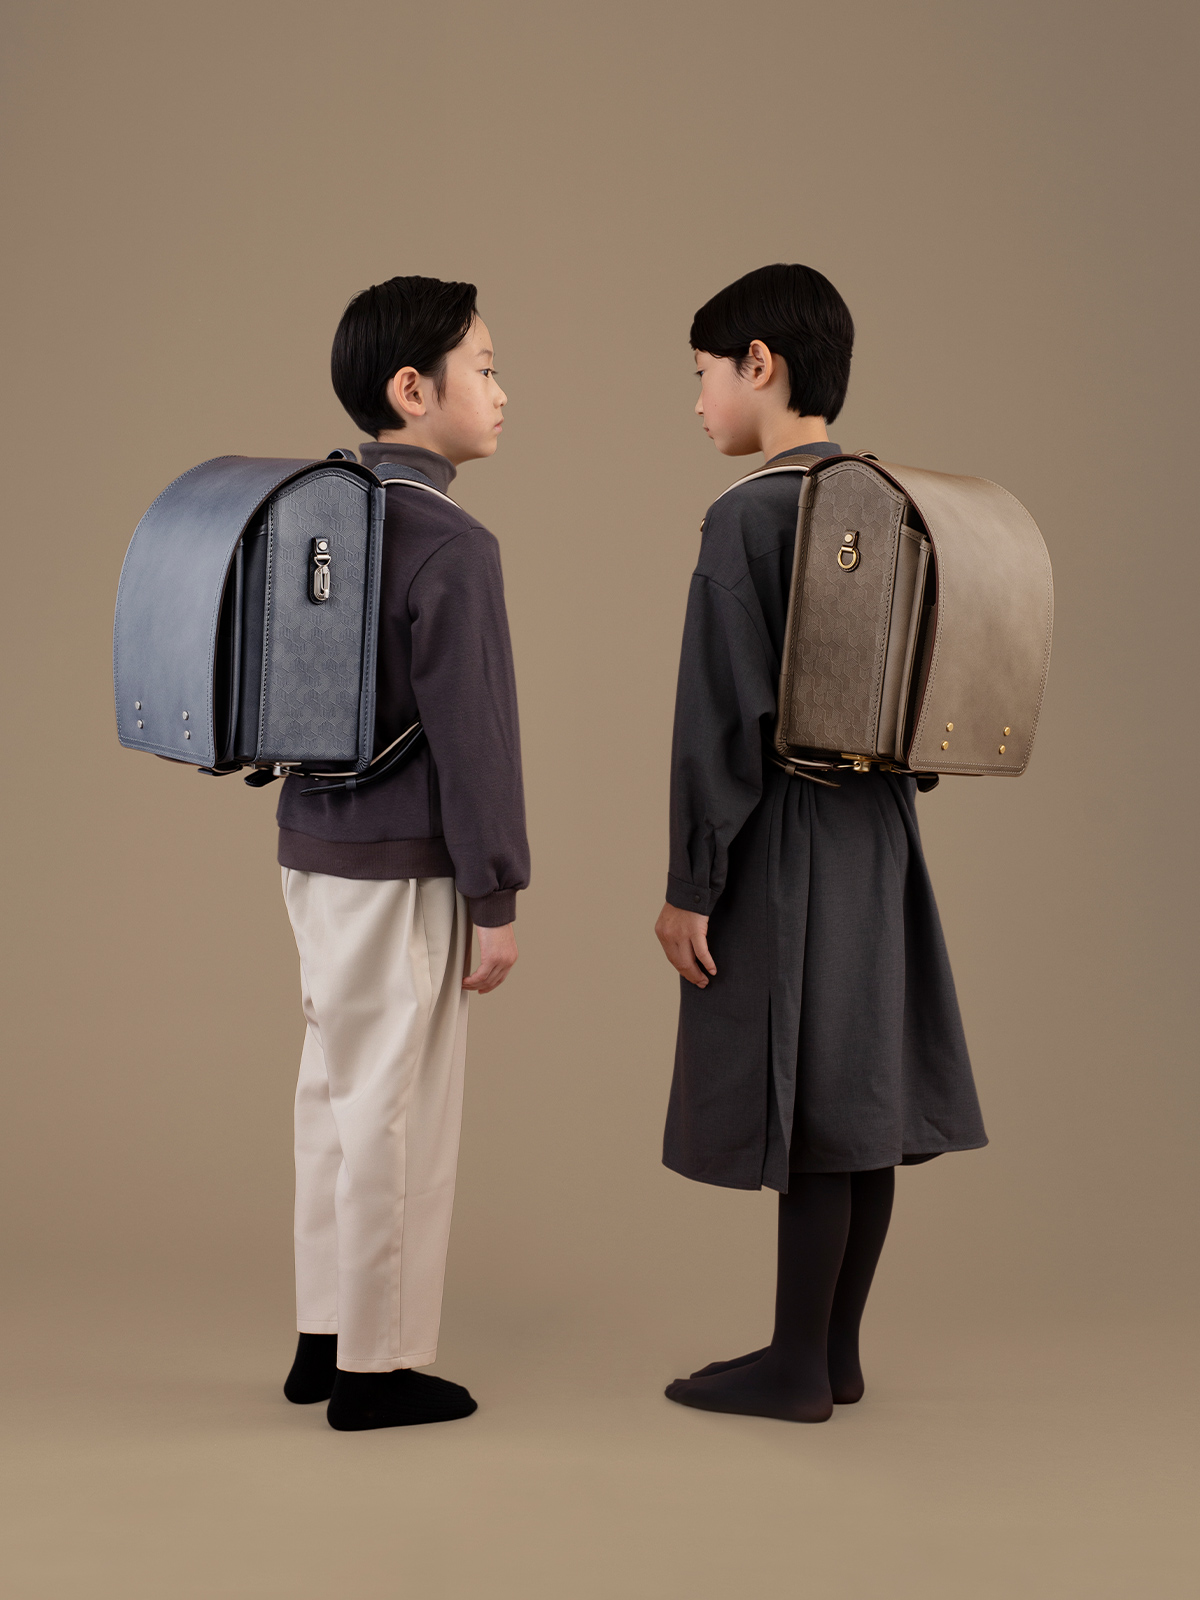 [Tsuchiya Kaban x Kyogen] Birth of the “HERTE” designer school bag based on family crests